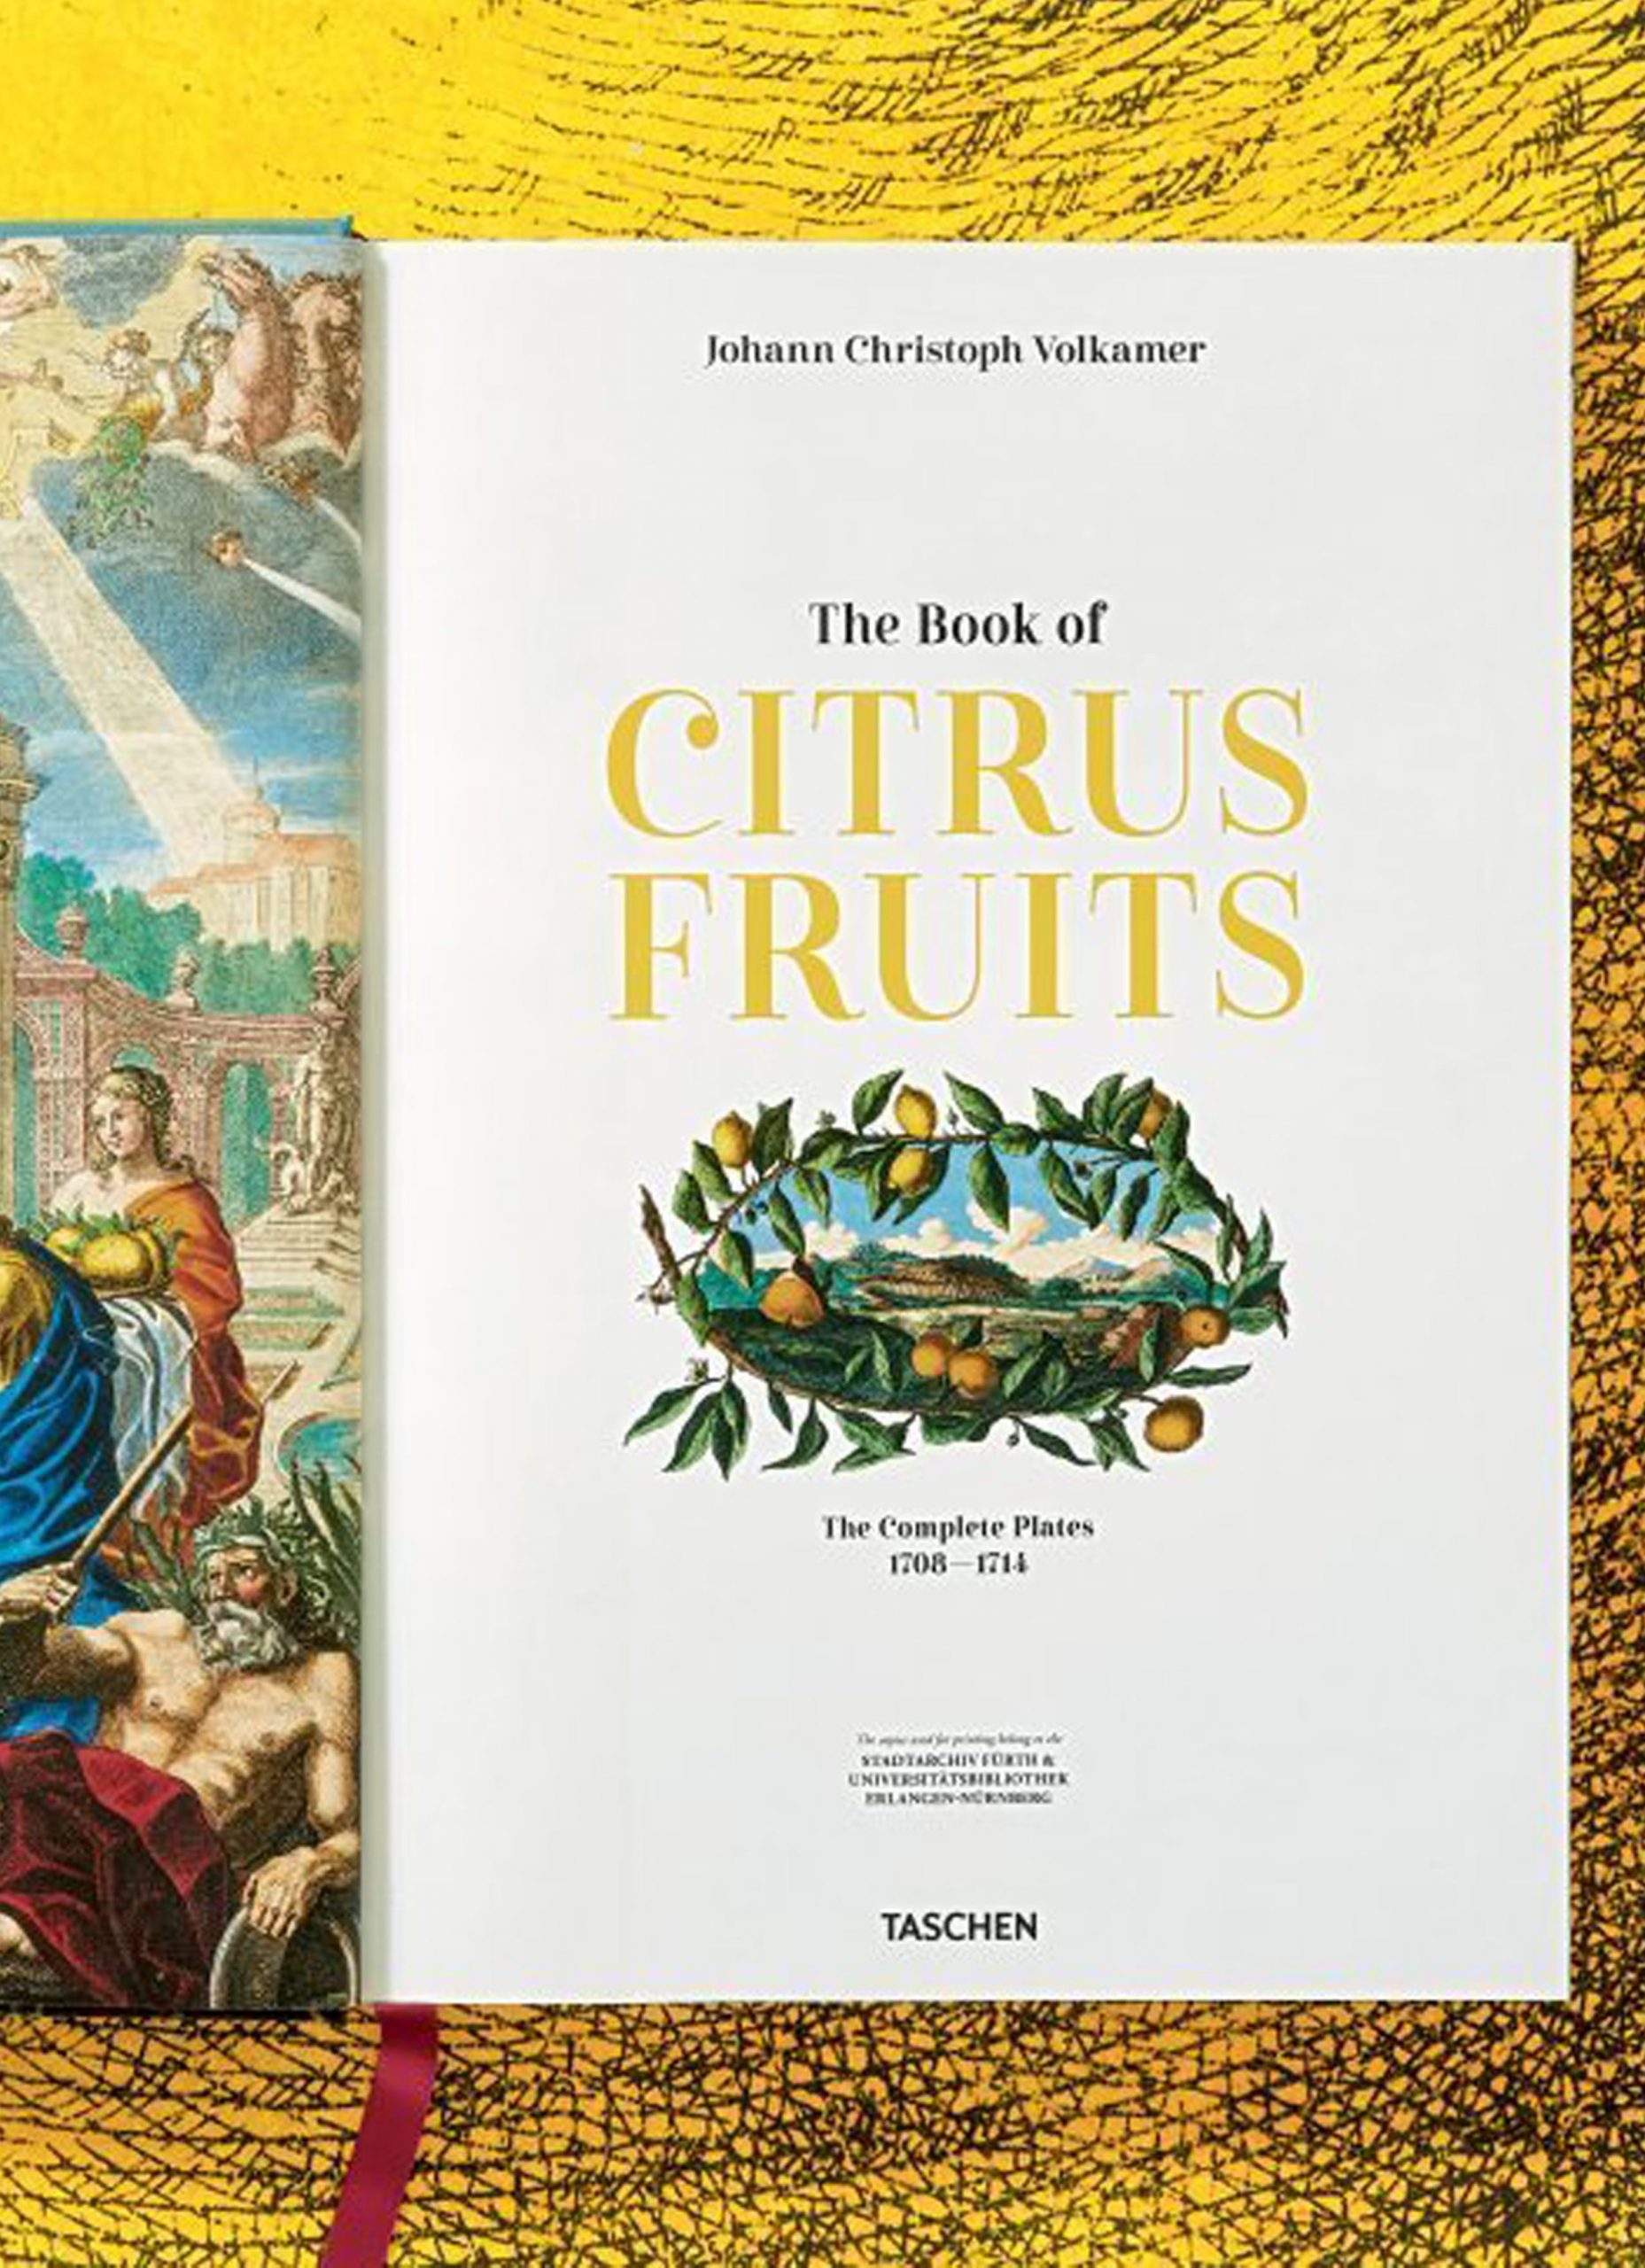 Taschen - J. C. Volkamer - The Book of Citrus Fruits